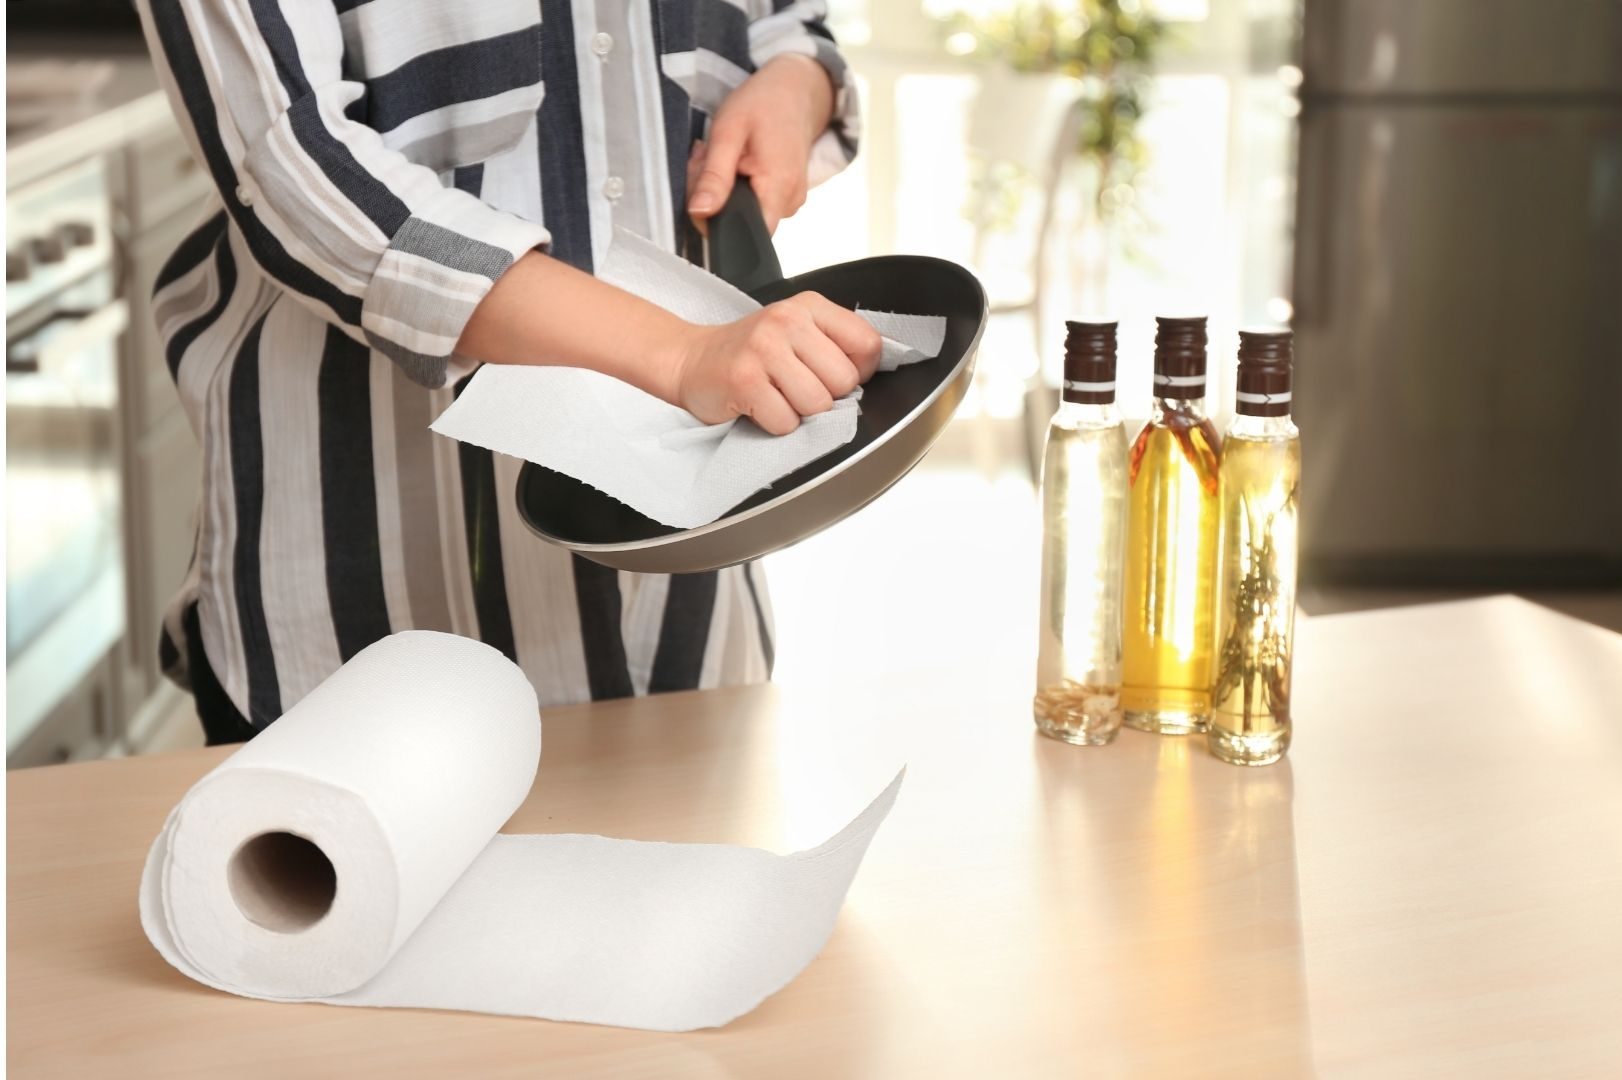 Papel toalha: confira dicas de 6 utilidades incríveis para testar na sua casa